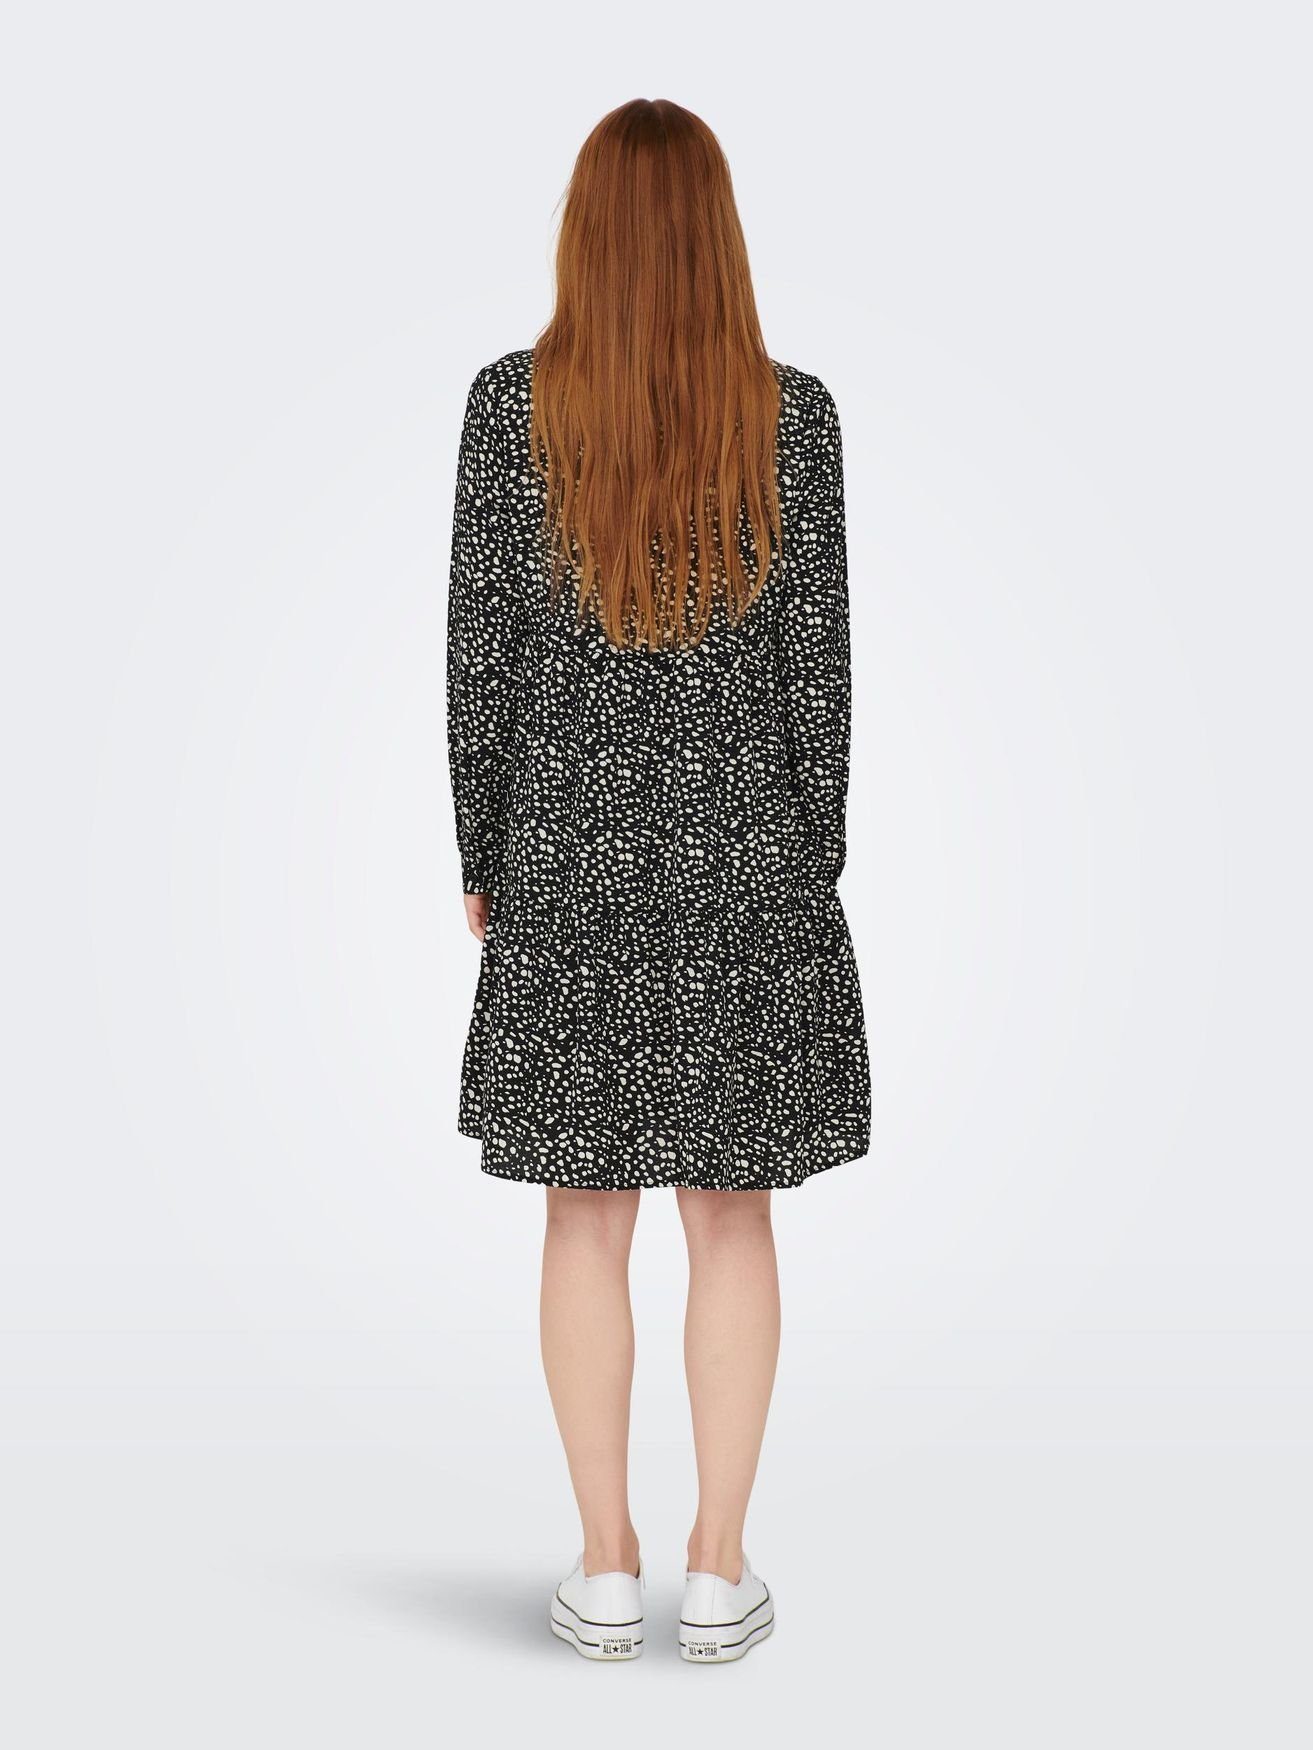 Kurzes Kleid Shirtkleid Tunika (lang) Bluse YONG Gemusterte in JDYPIPER 4536 de JACQUELINE Langarm Schwarz-6